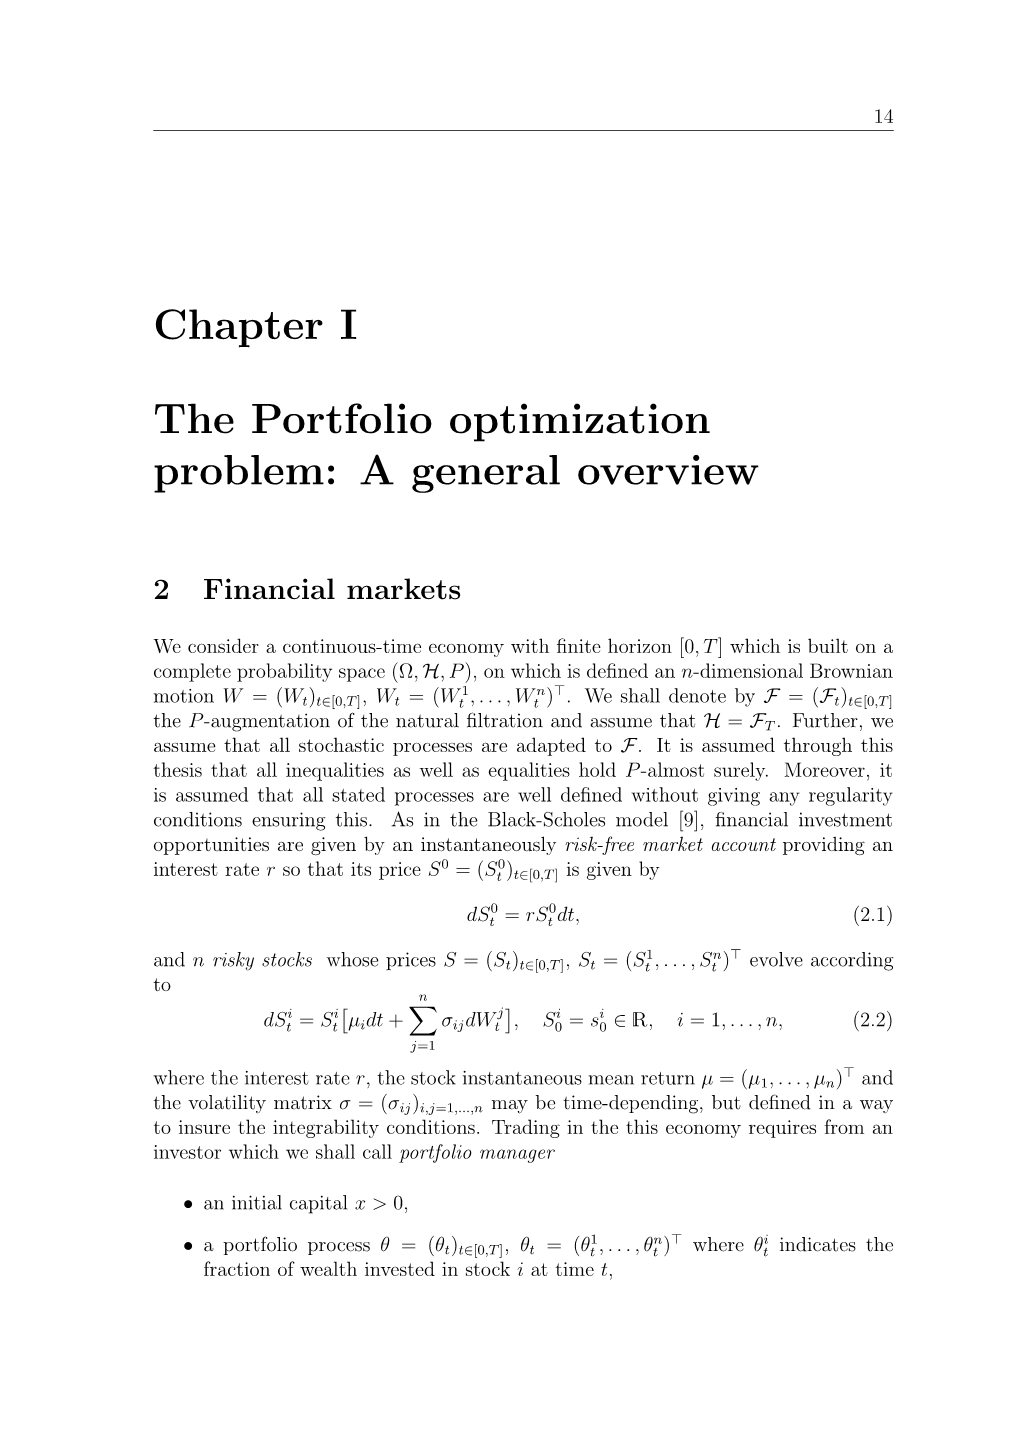 Chapter I the Portfolio Optimization Problem: a General Overview